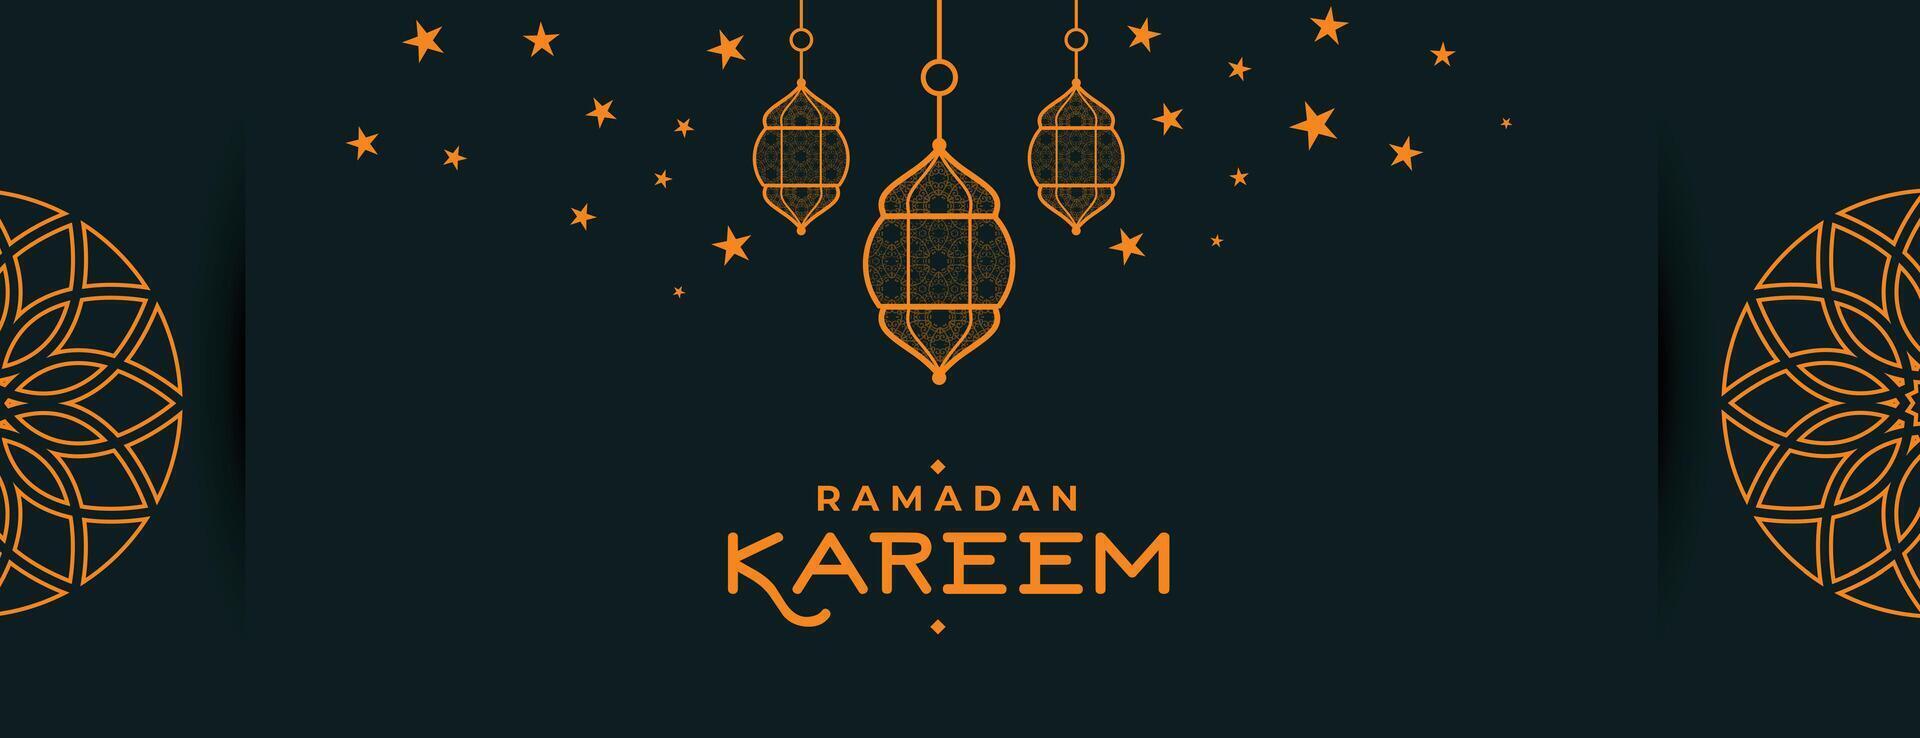 plano islâmico Ramadã kareem festival bandeira Projeto vetor